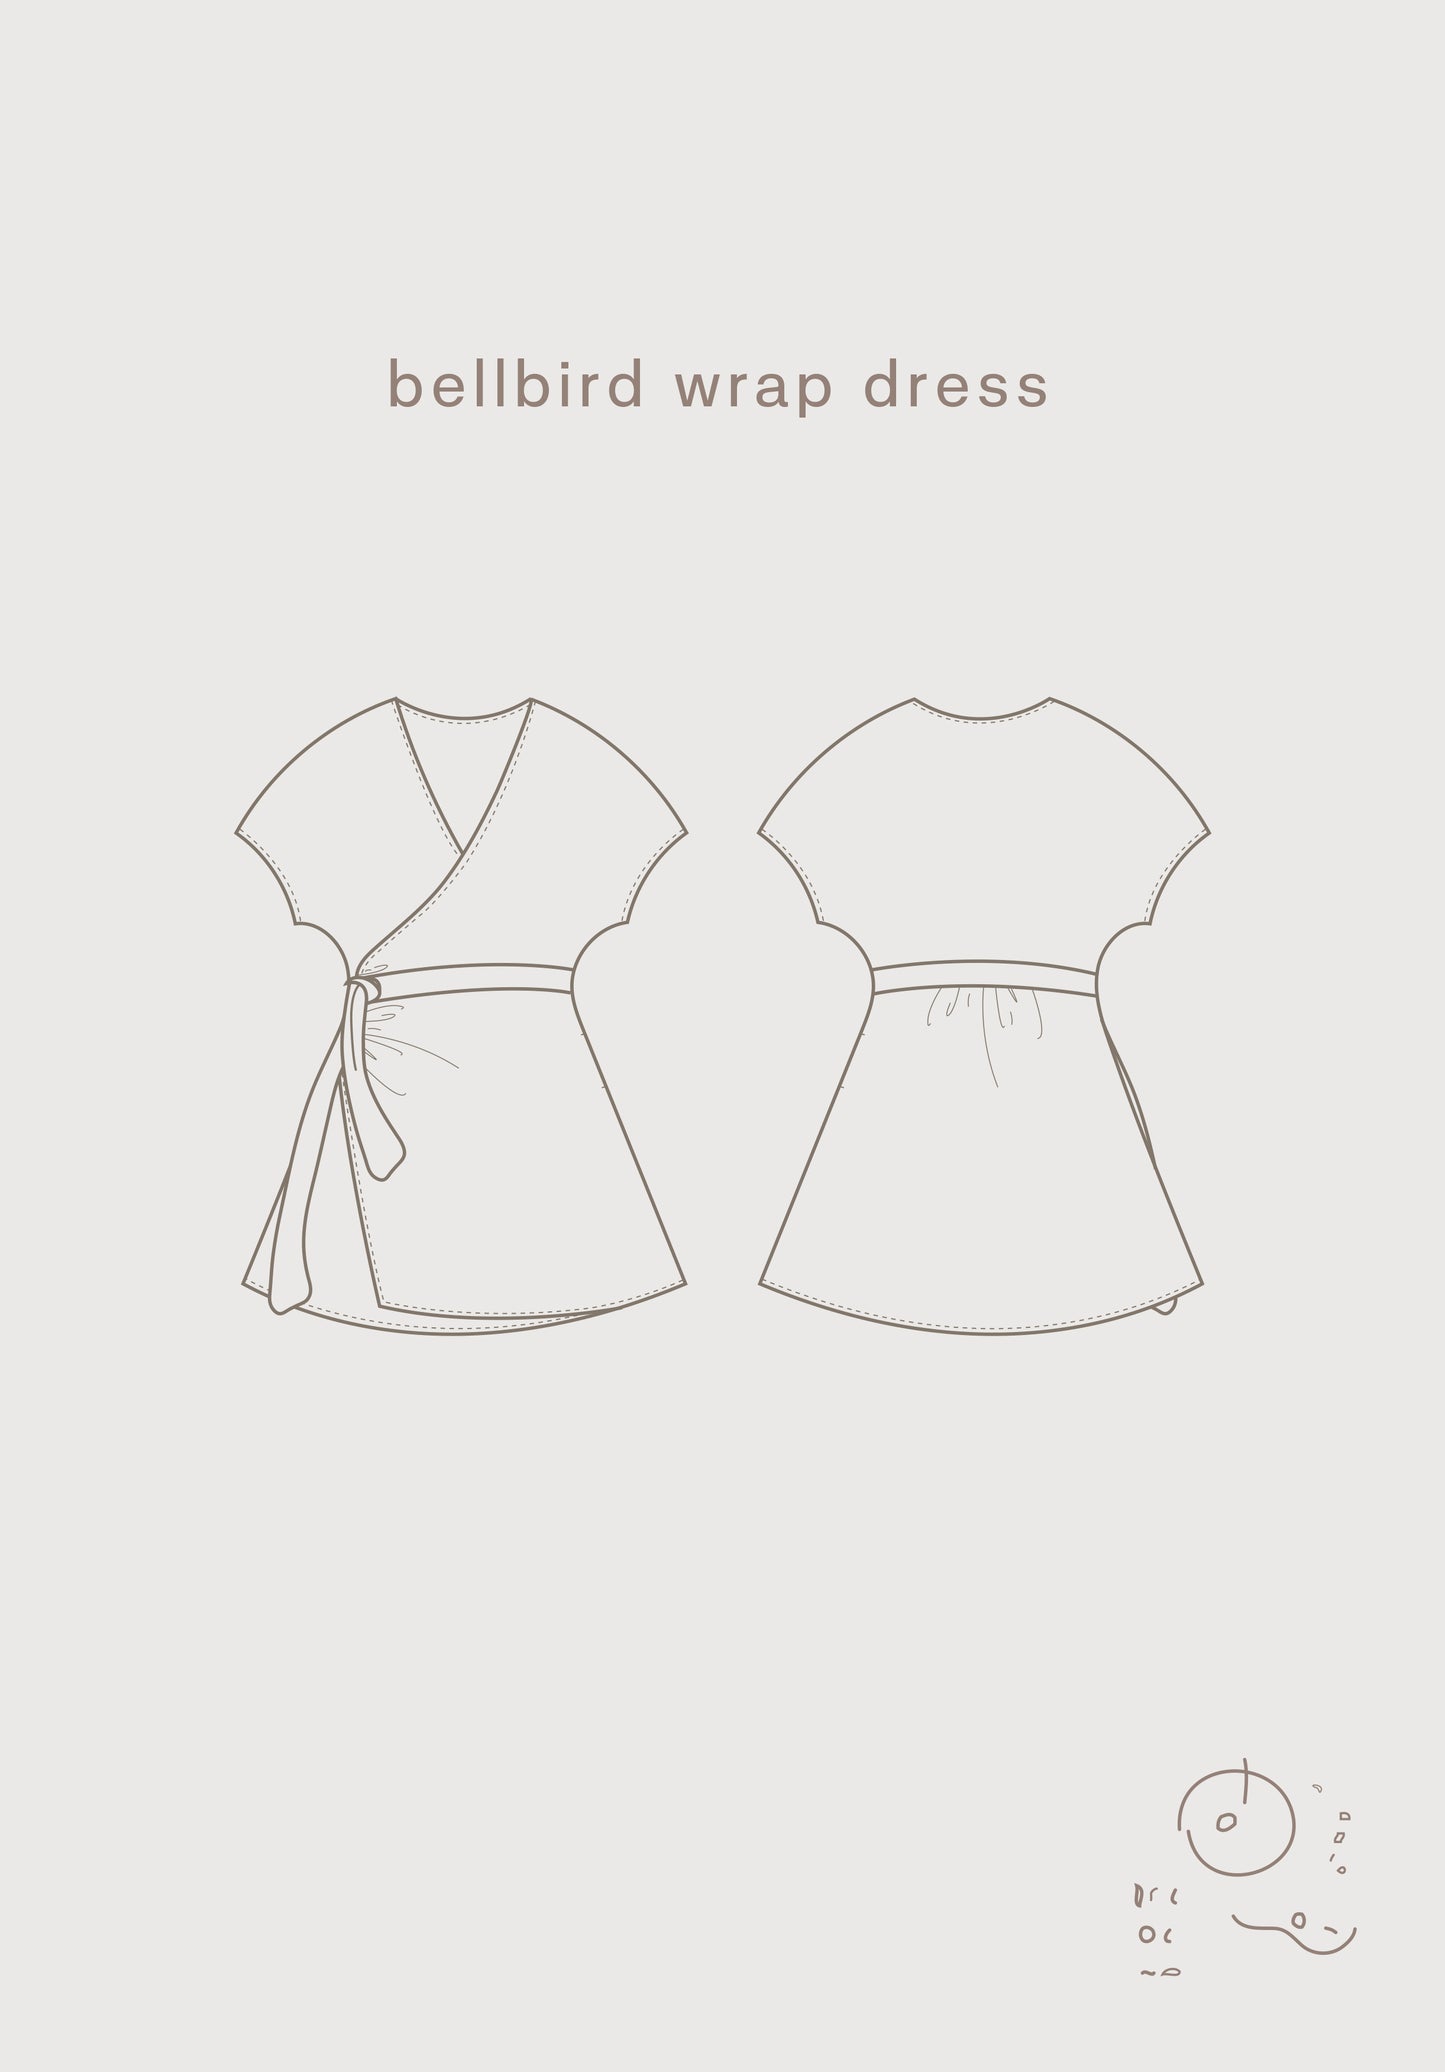 Common Stitch Bellbird Wrap Dress and Top